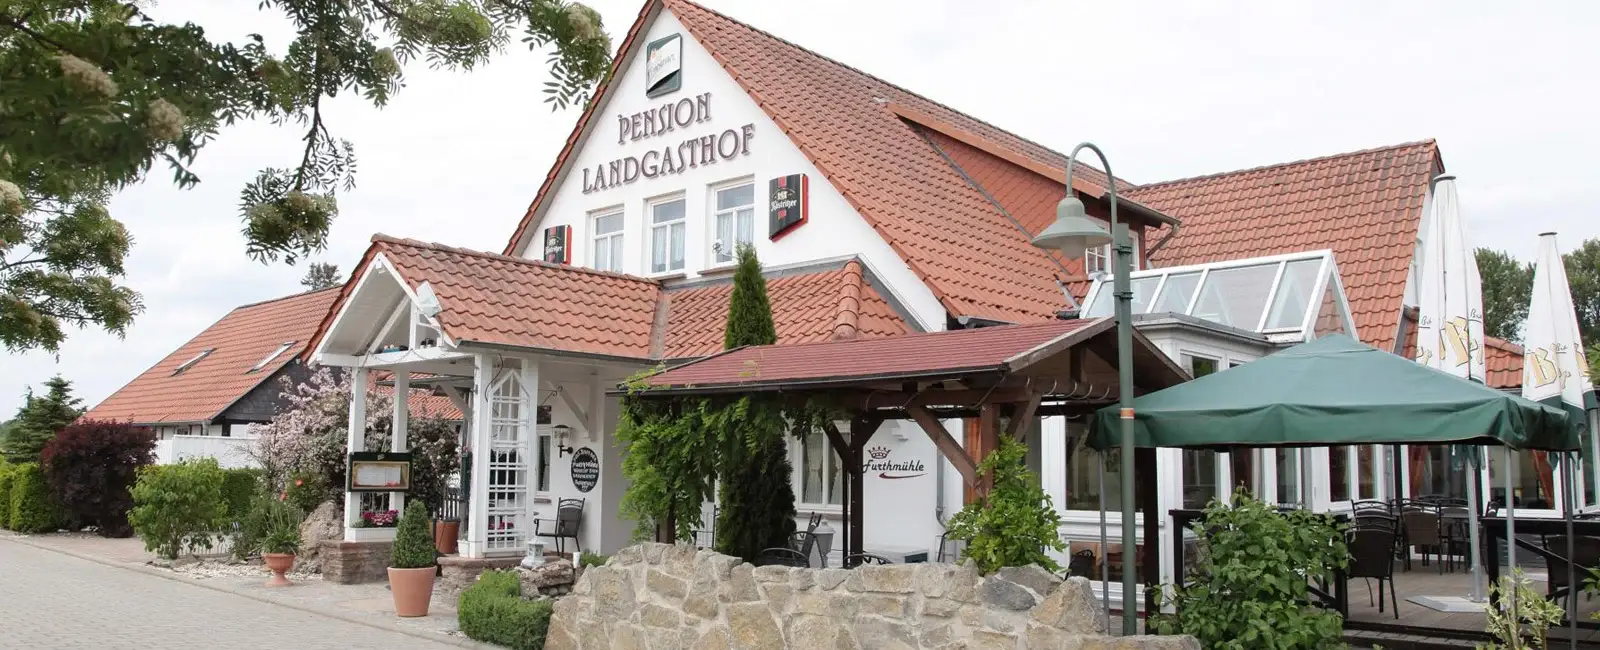 Landhotel Furthmühle Grabe in Thüringen